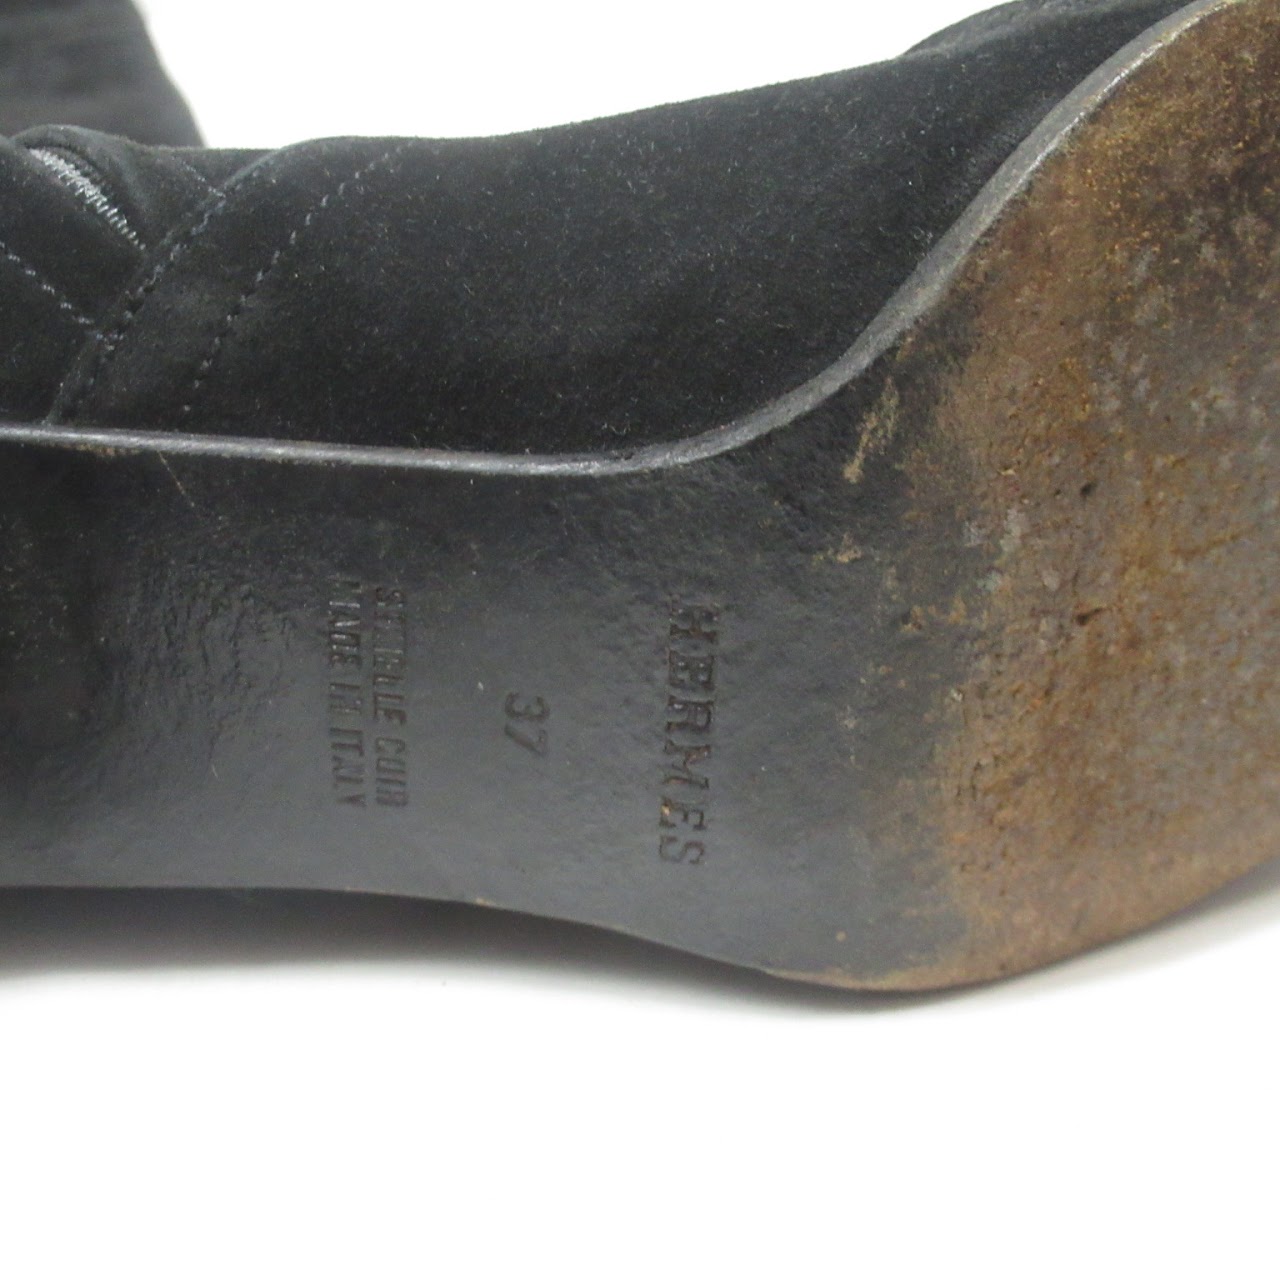 Hermès Suede Knee-High Boots